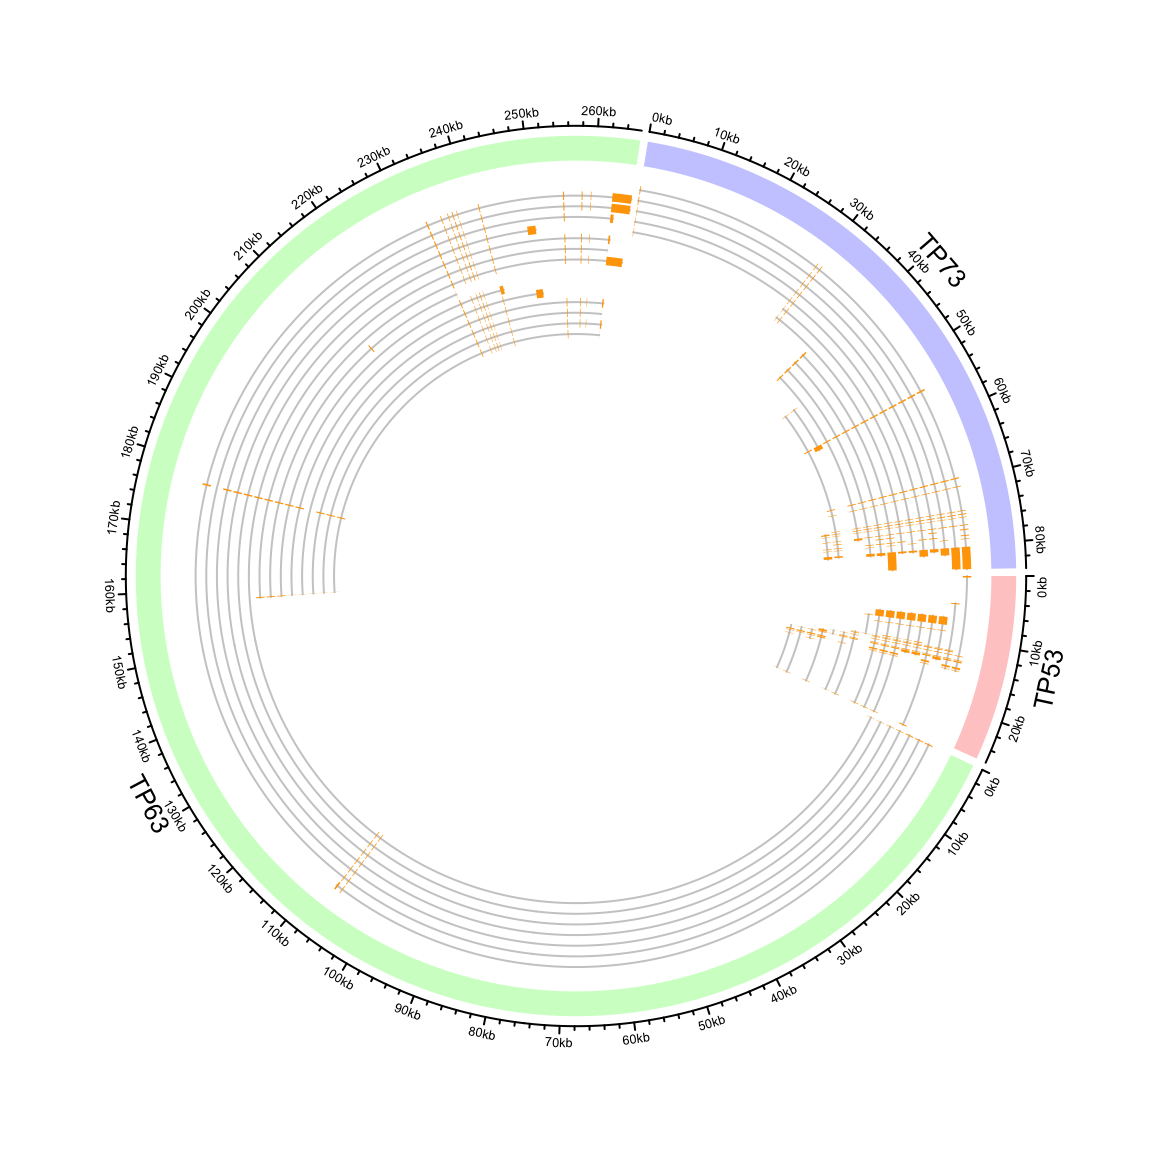 Circular representation of alternative transcripts for genes.